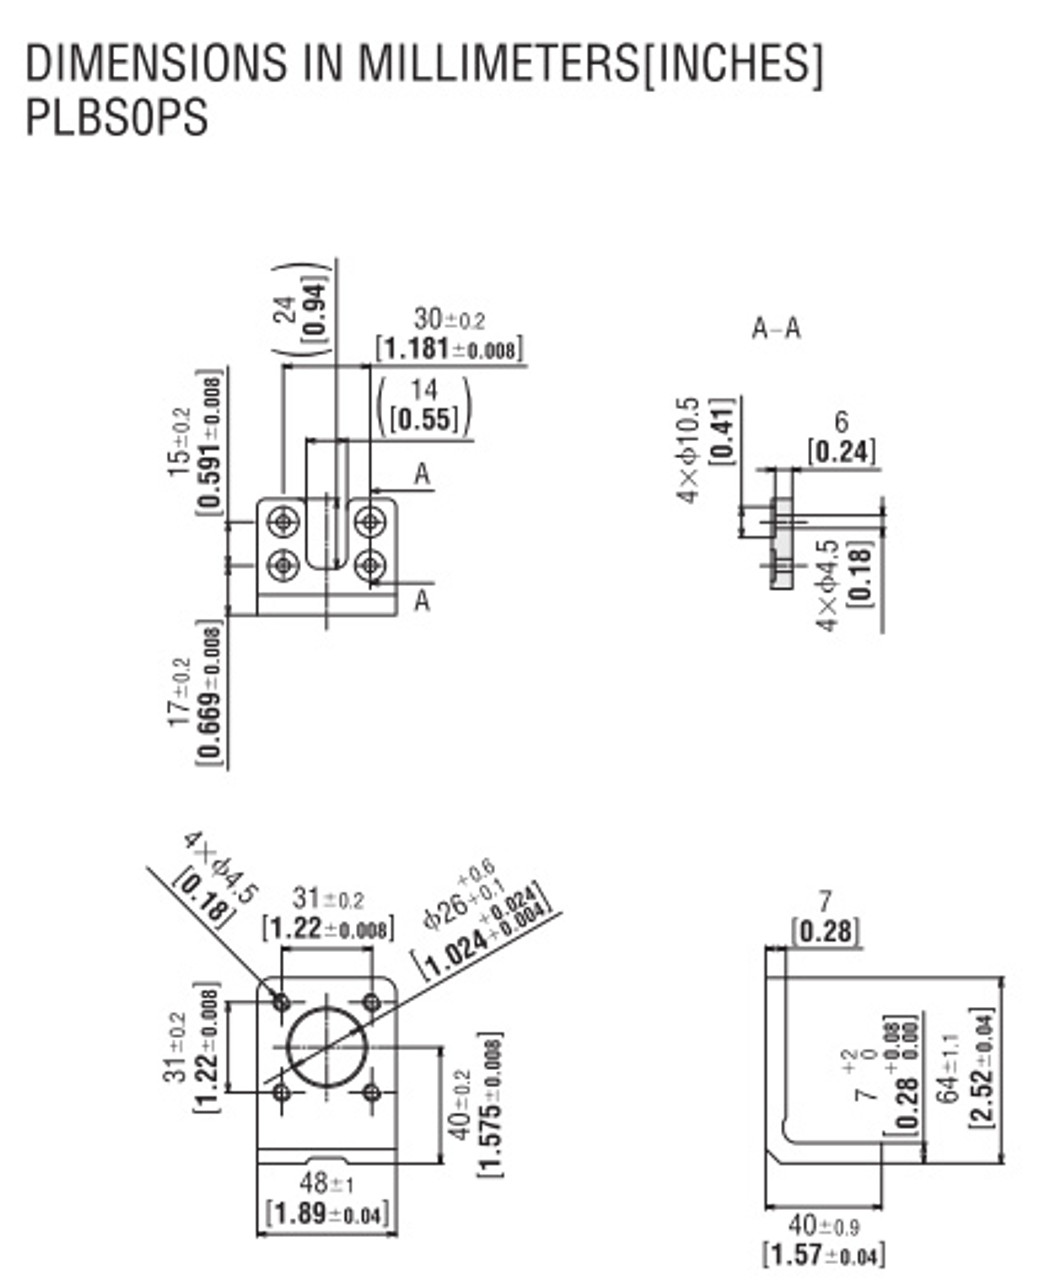 PLBS0PS - Dimensions